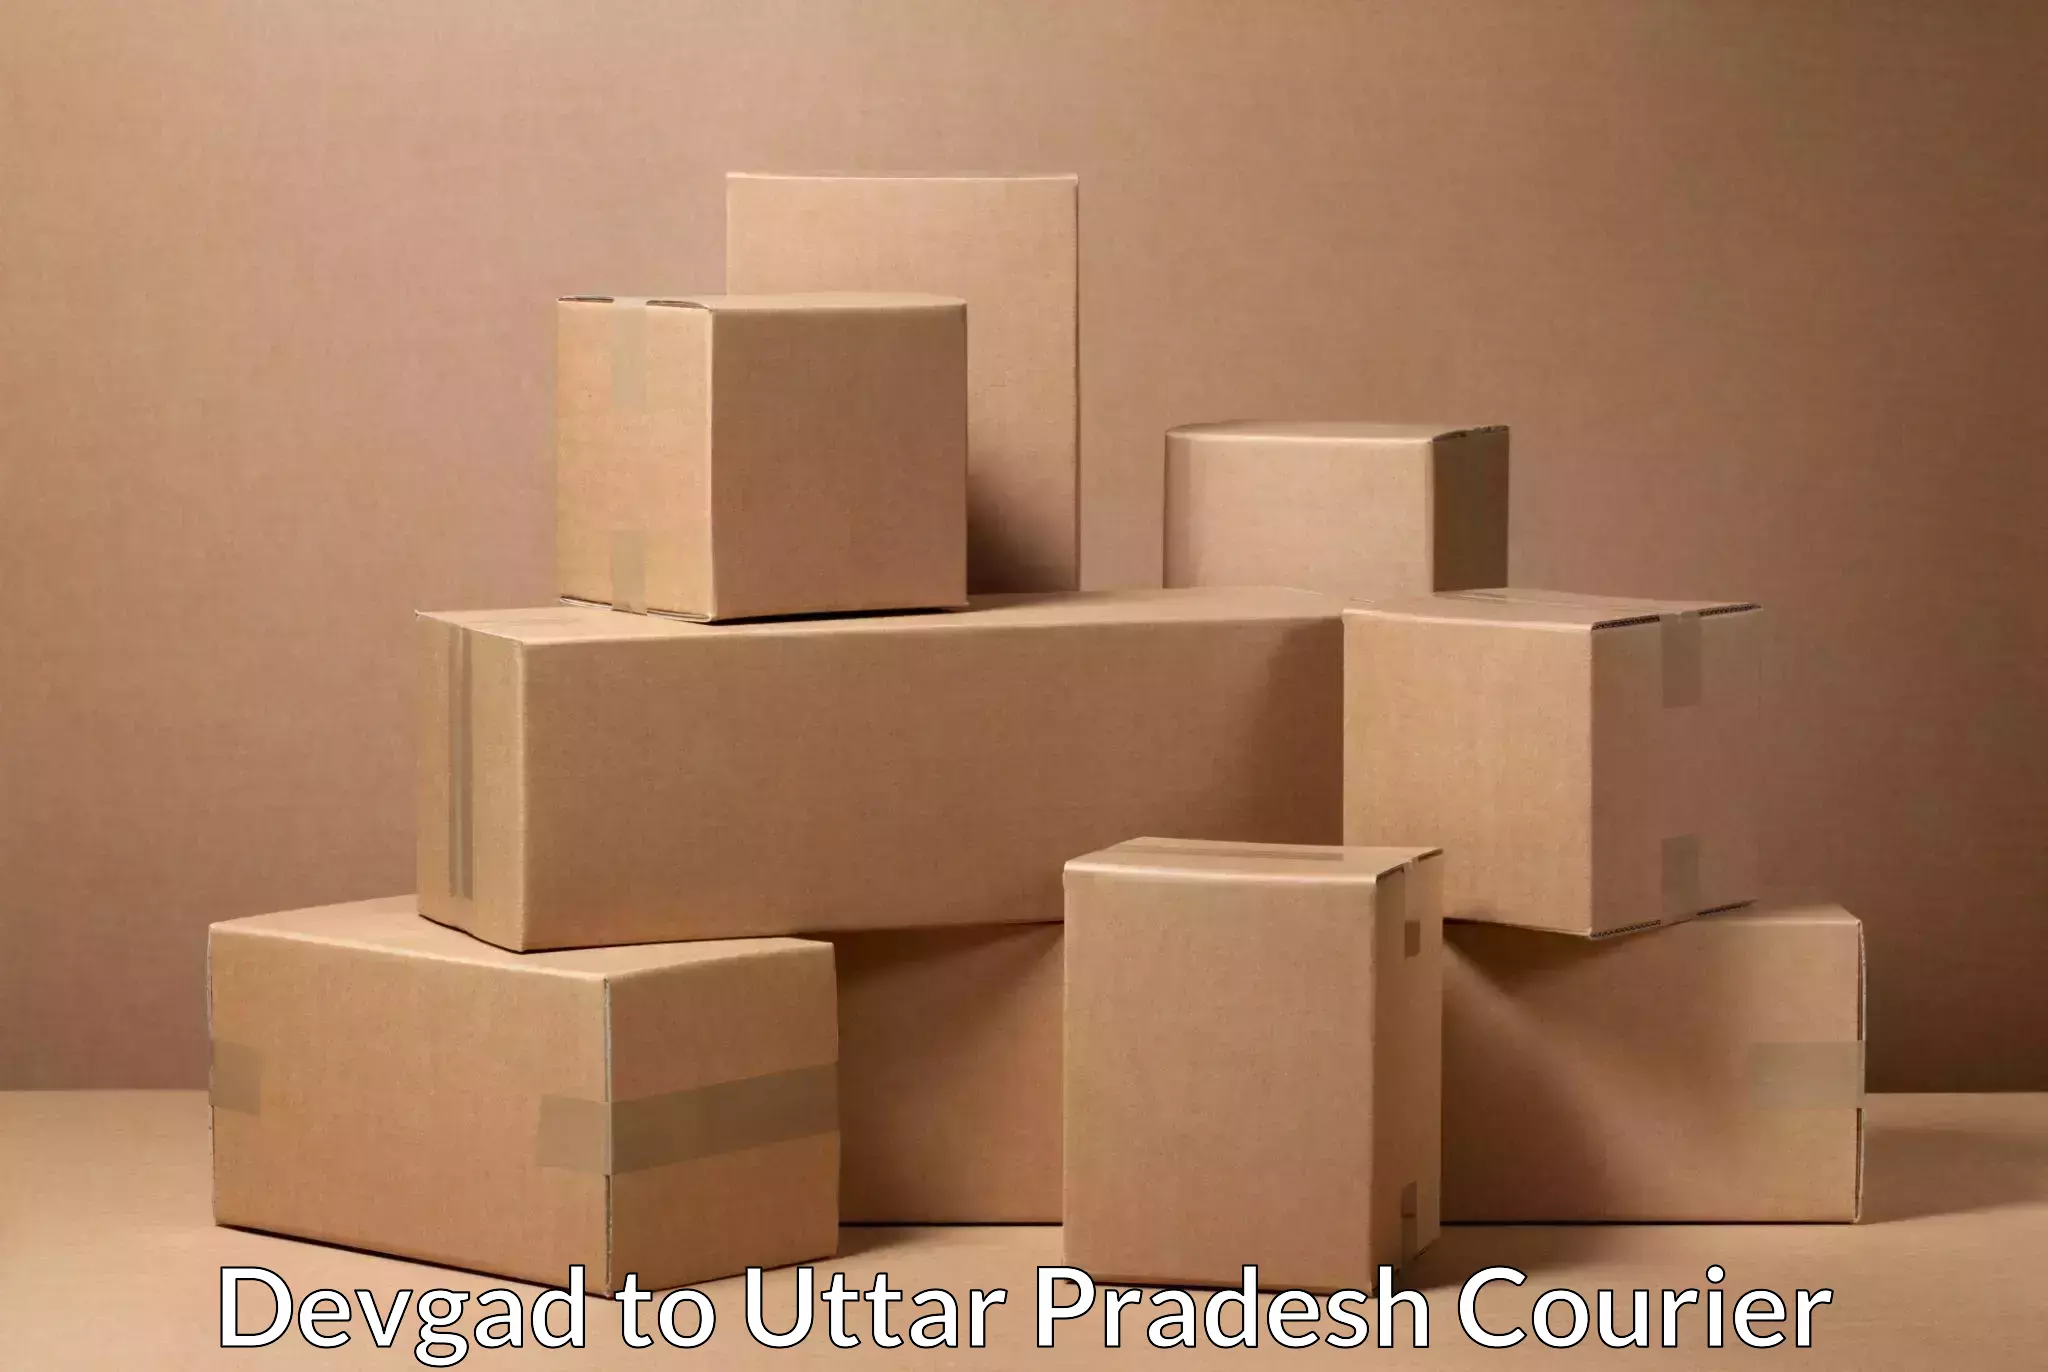 Fast delivery service Devgad to Uttar Pradesh